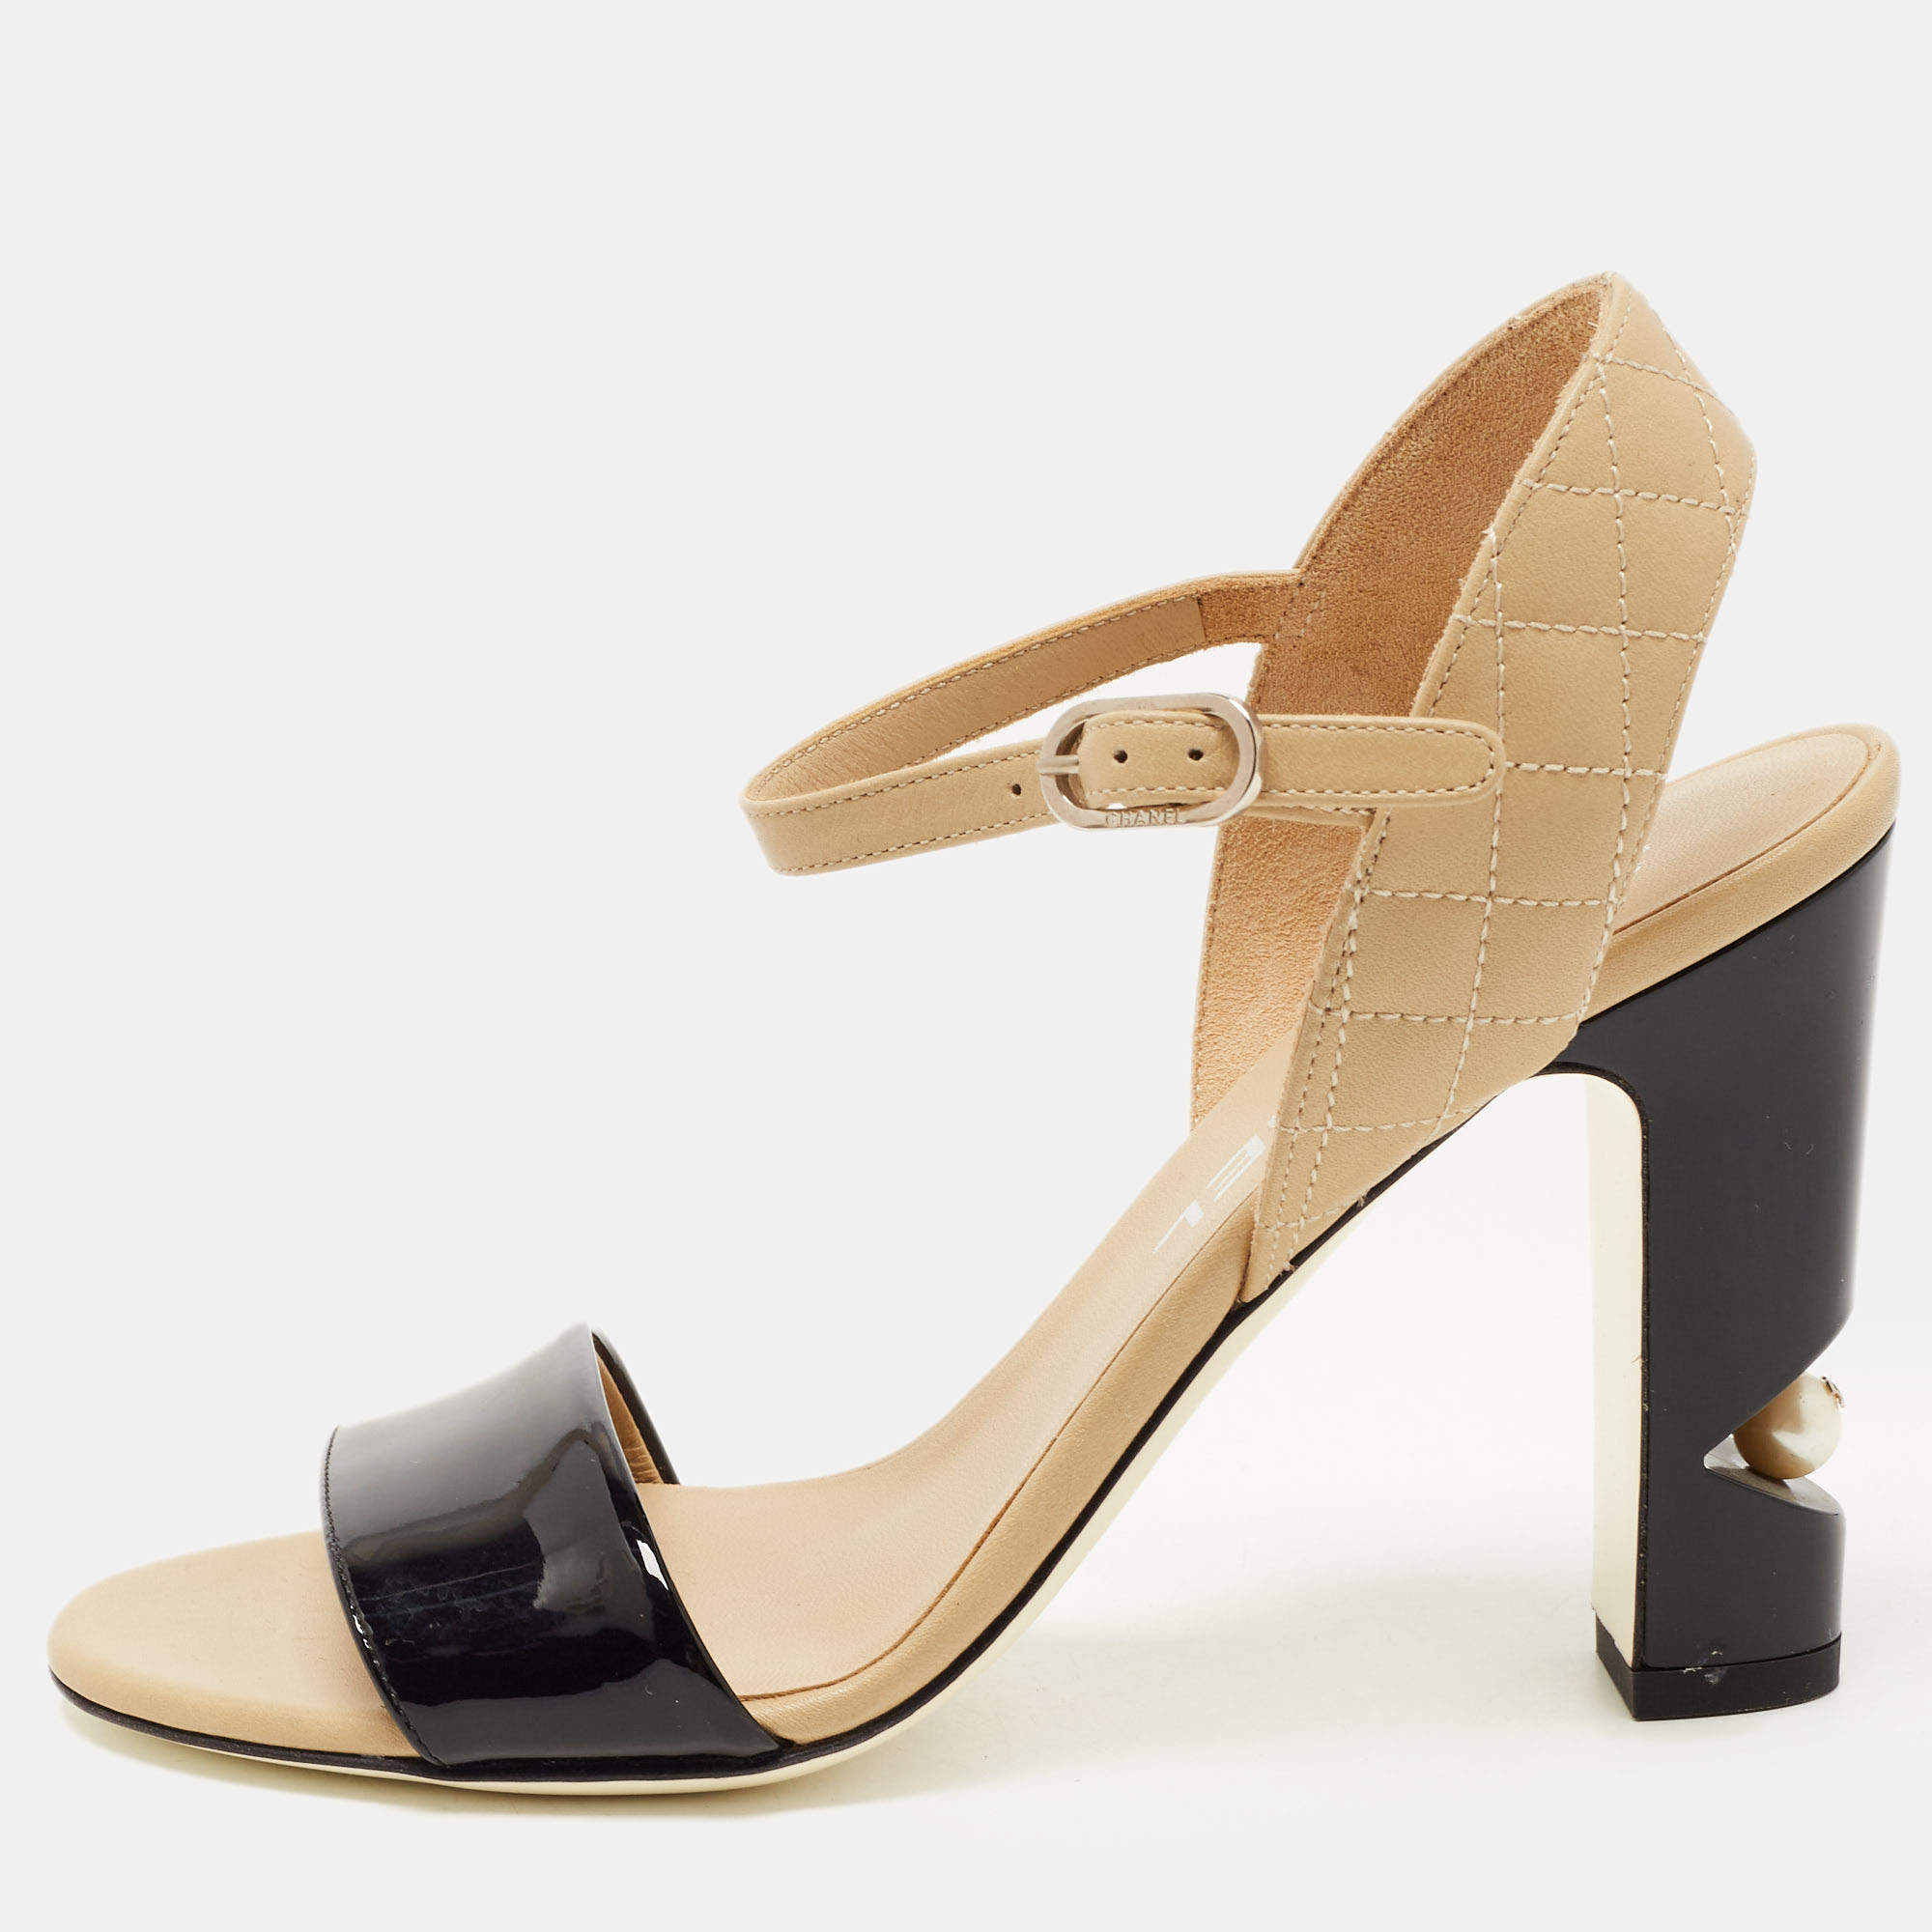 Chanel Beige/Black Leather Ankle Strap Sandals Size 35